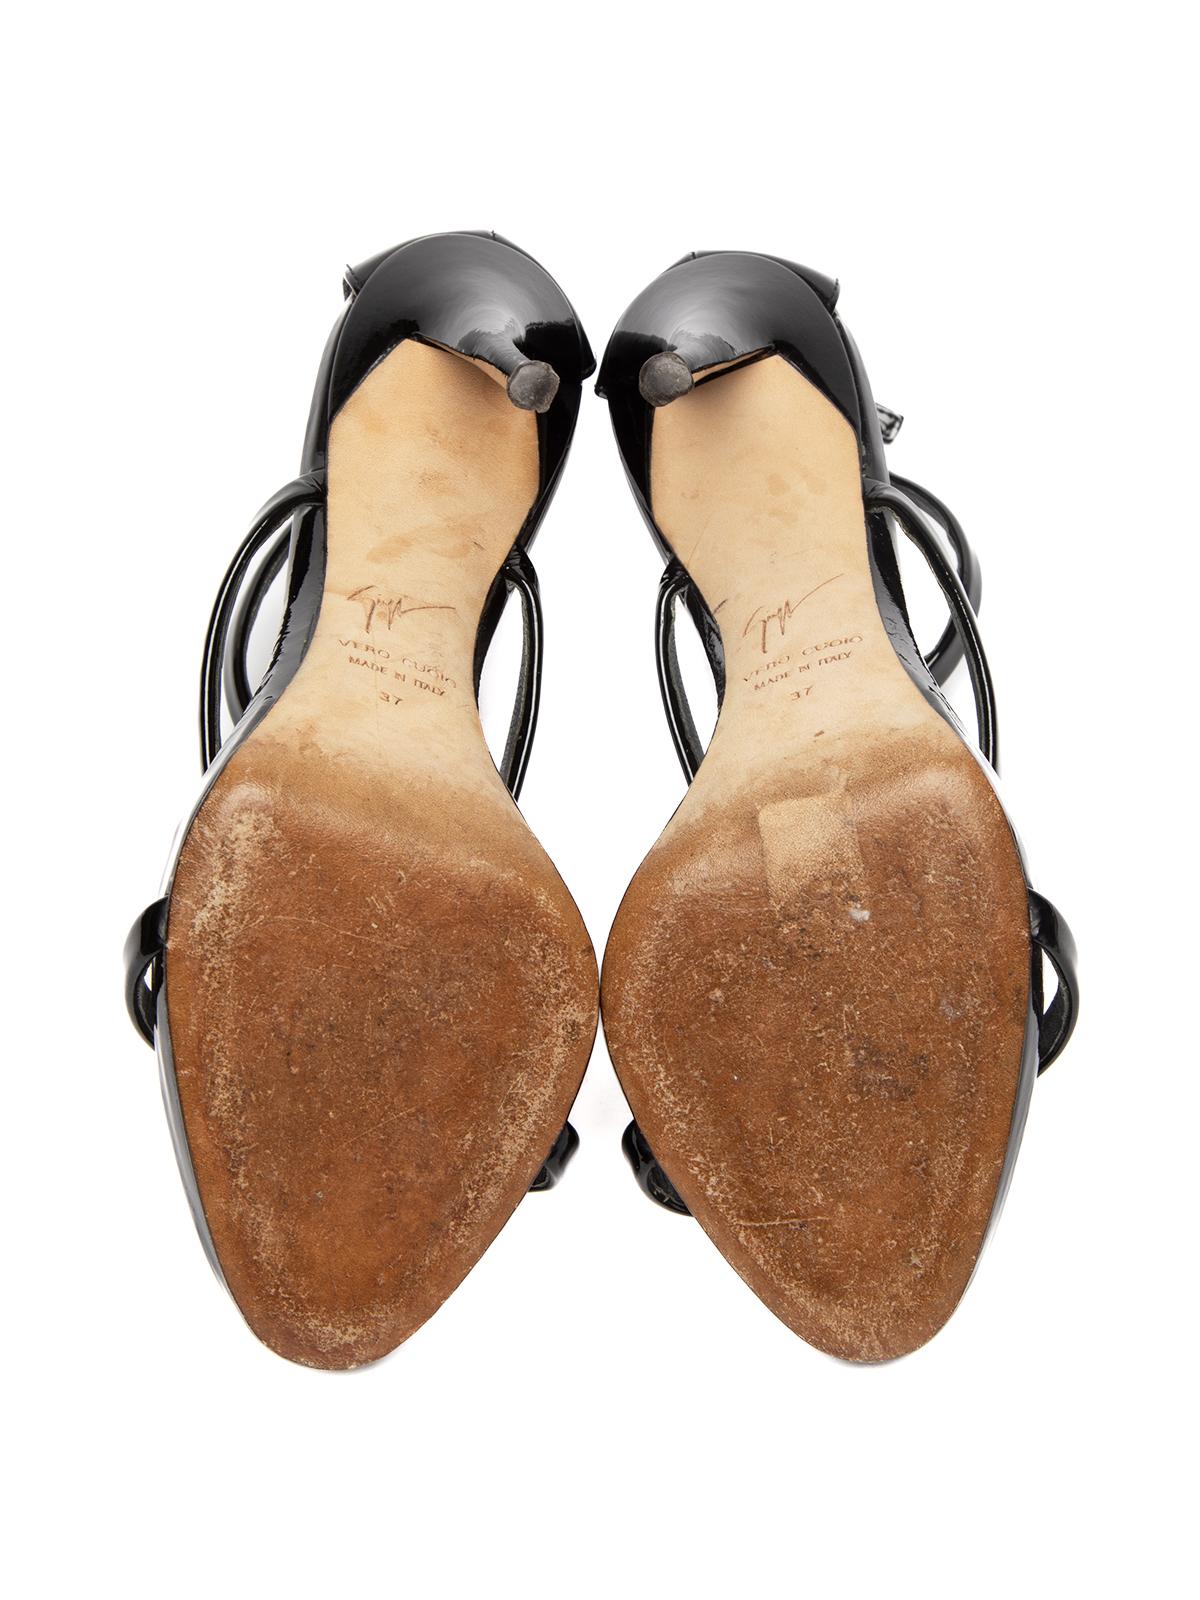 Pre-Loved Giuseppe Zanotti Women's Leather Harmony Sandals Heels 1